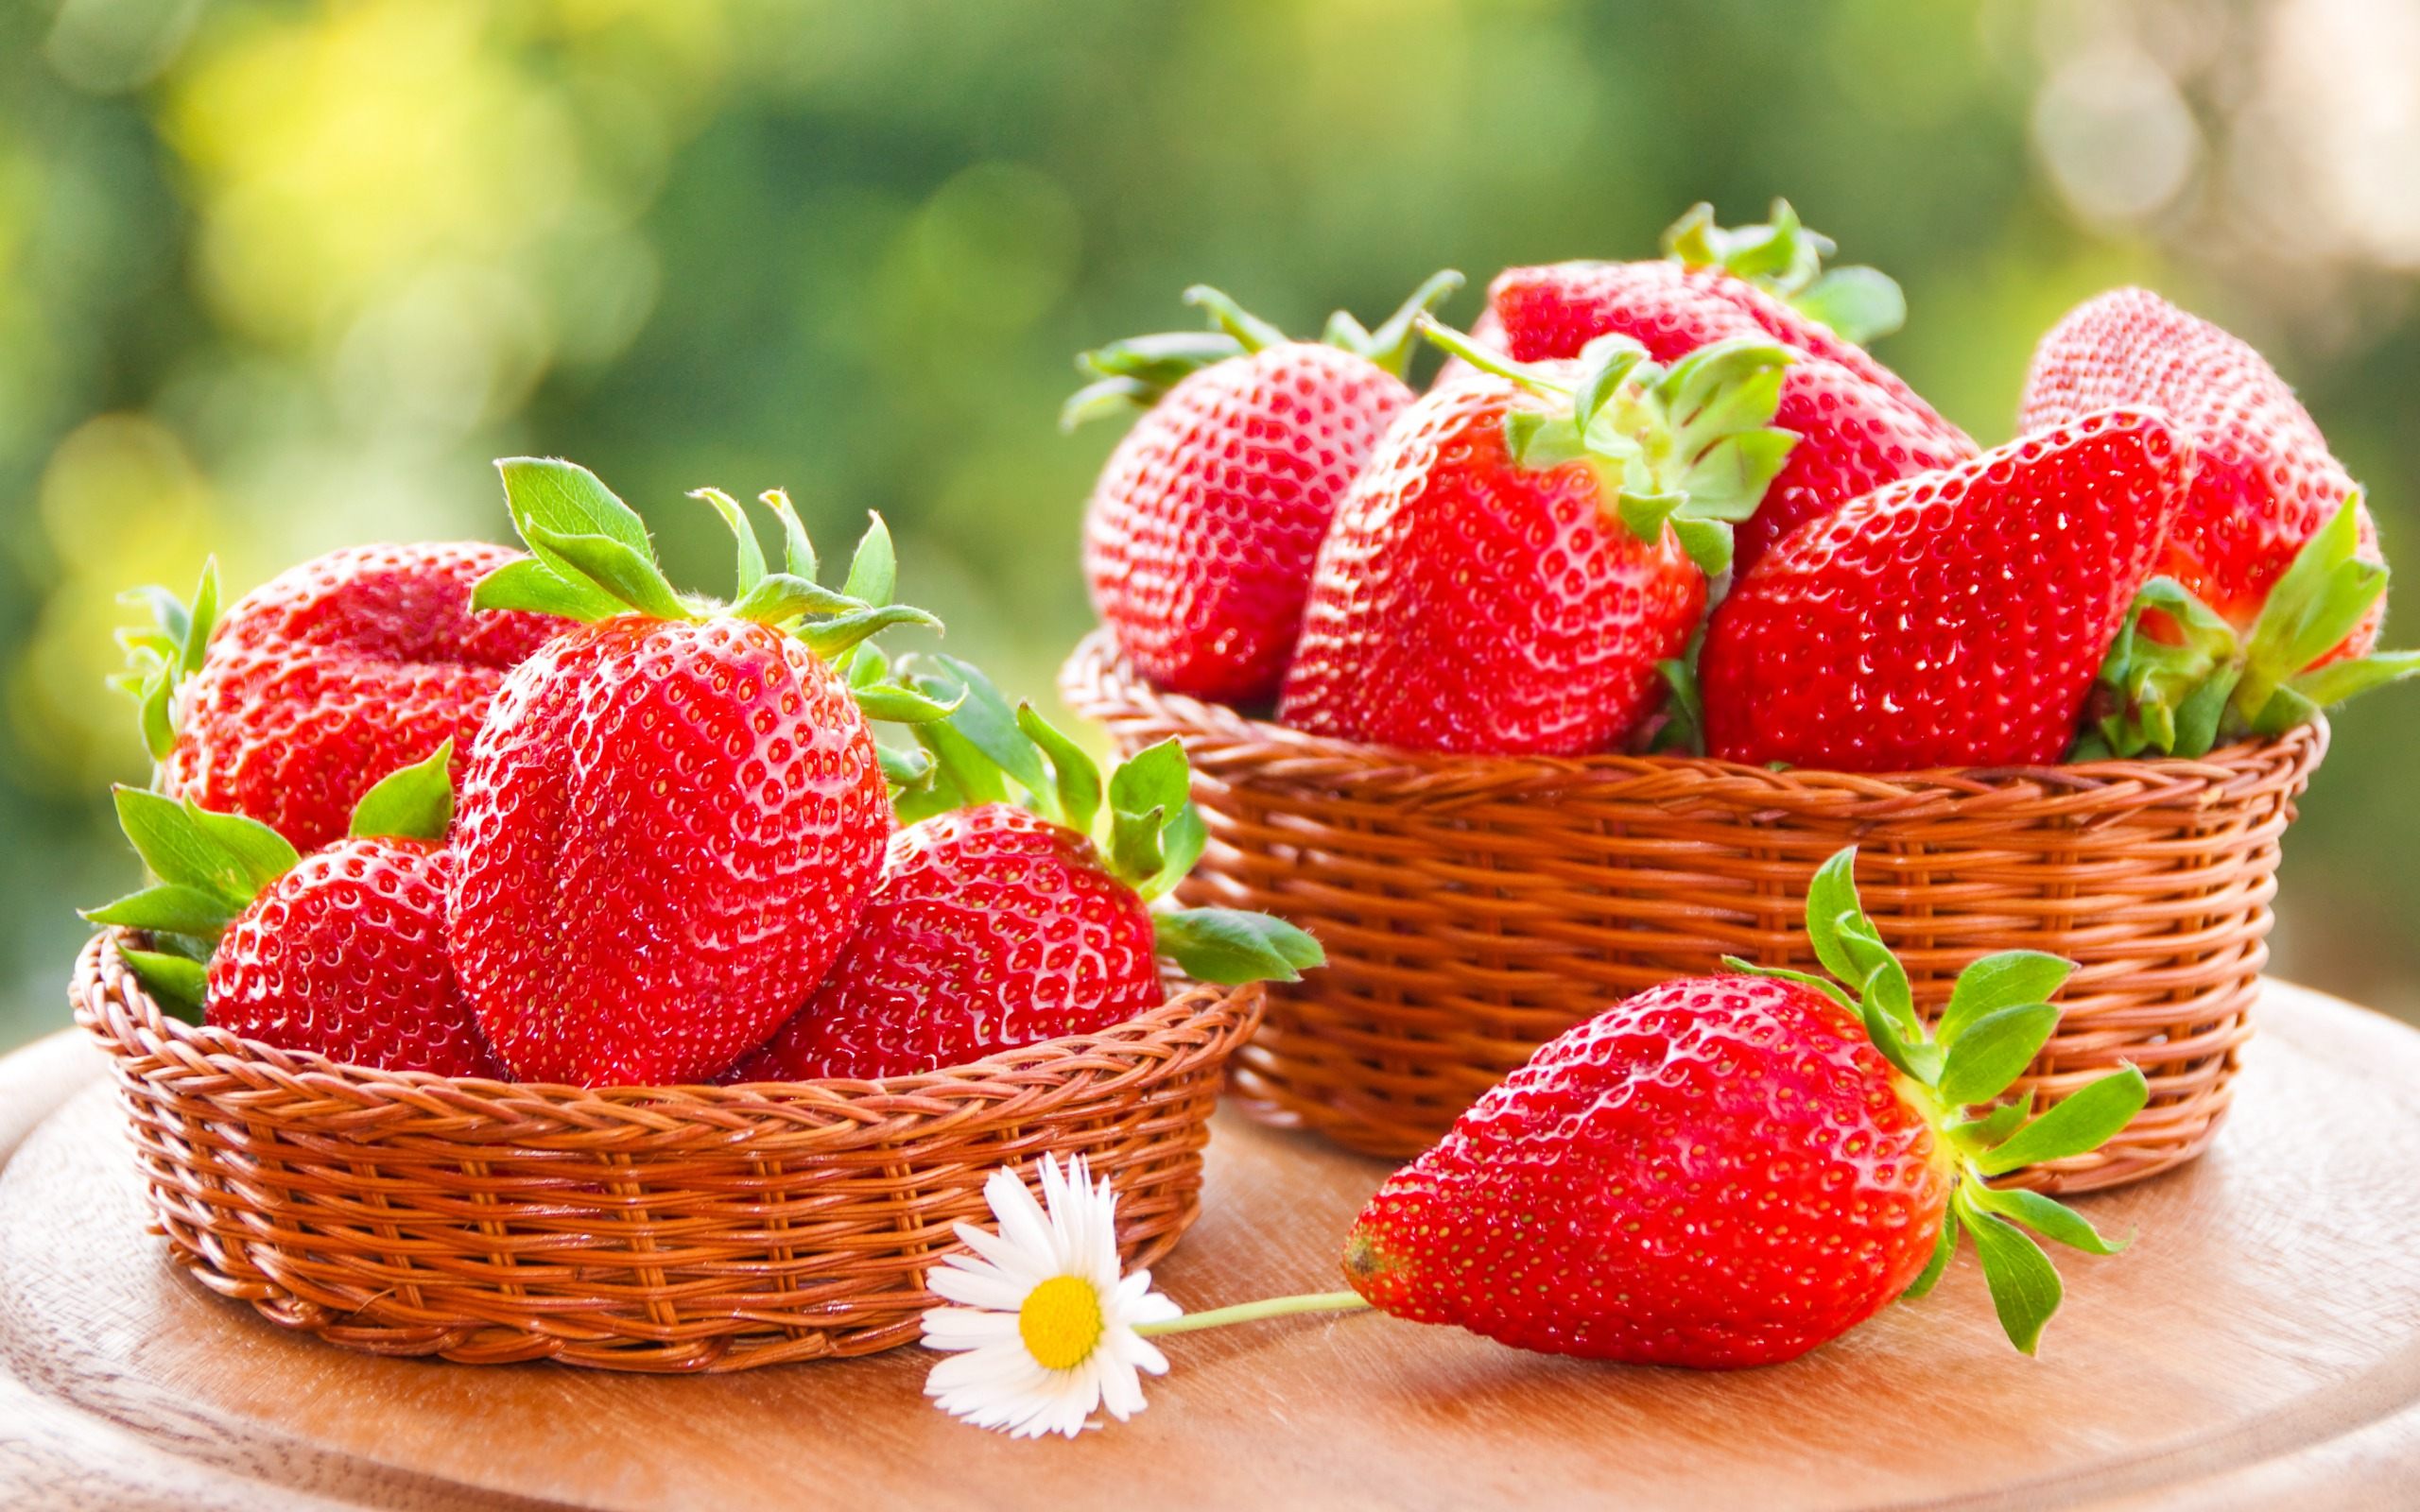 Strawberry Fruit Background Wallpaper For Desktop & Mobile